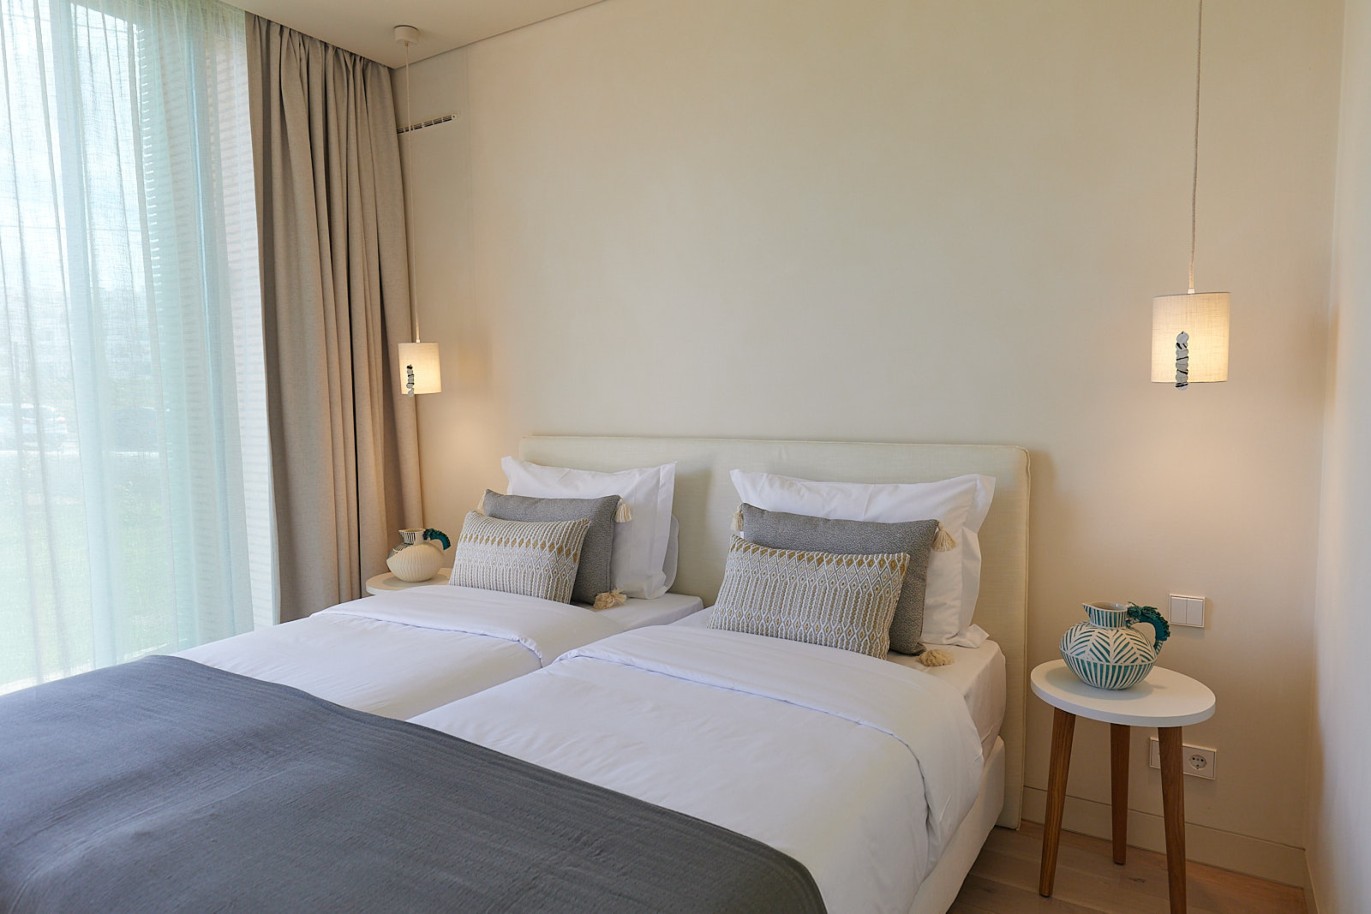 2 bedroom apartment in resort, for sale in Porches, Algarve_230494